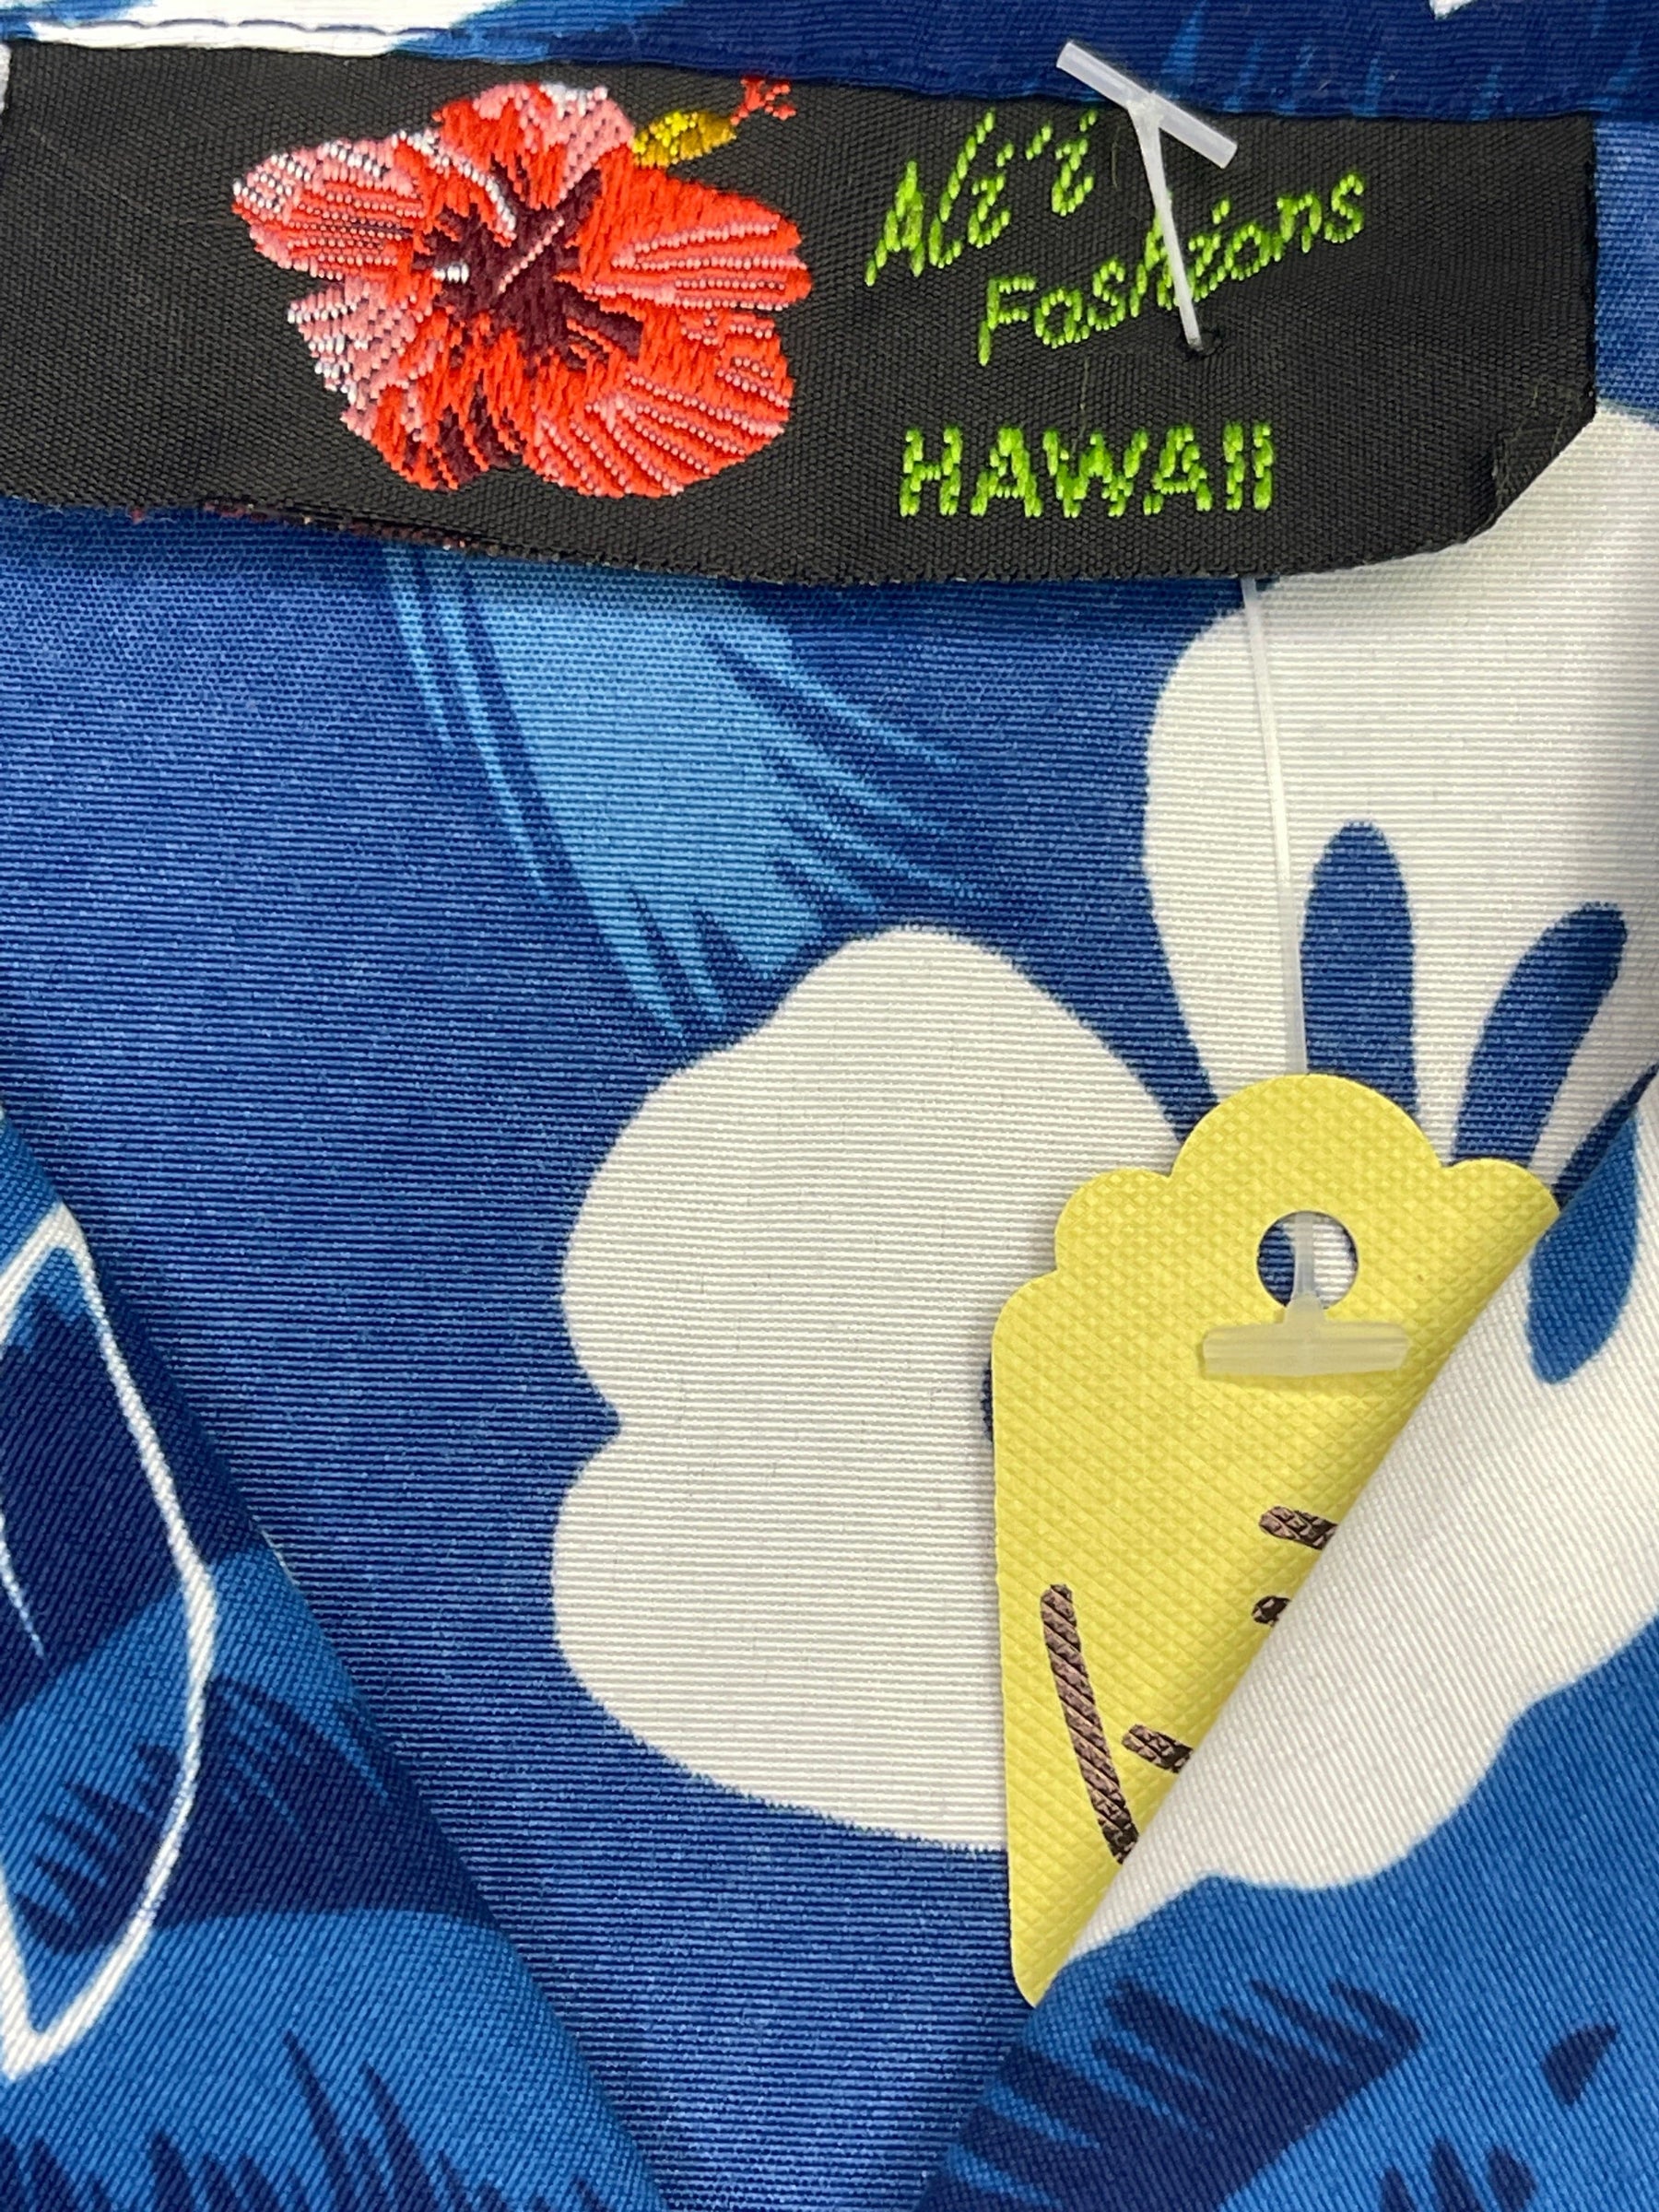 Made in Hawaii Blue Hawaiian Aloha Shirt Youth X-Small 4-5